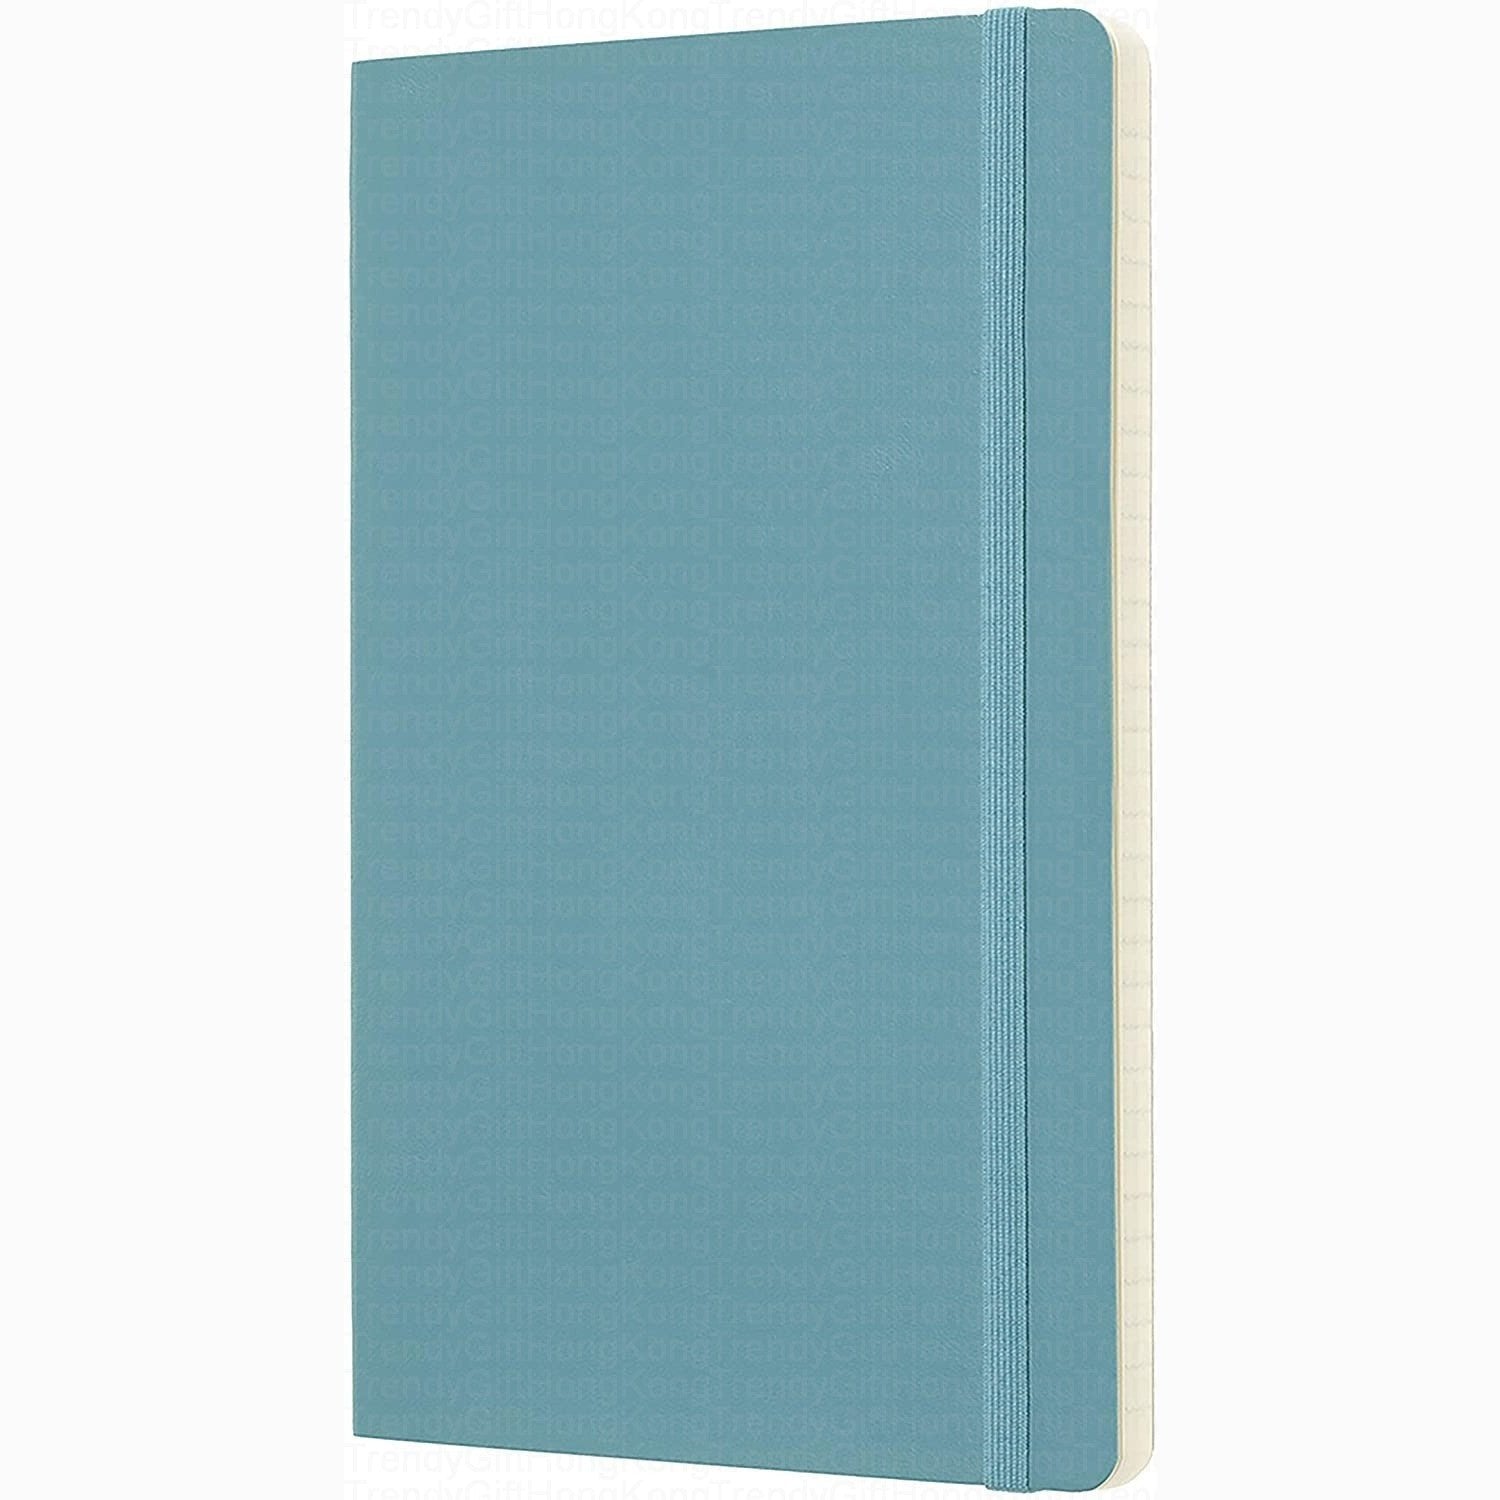 Moleskine Classic Notebook Large Soft Cover - 13 x 21 CM trendygifthk